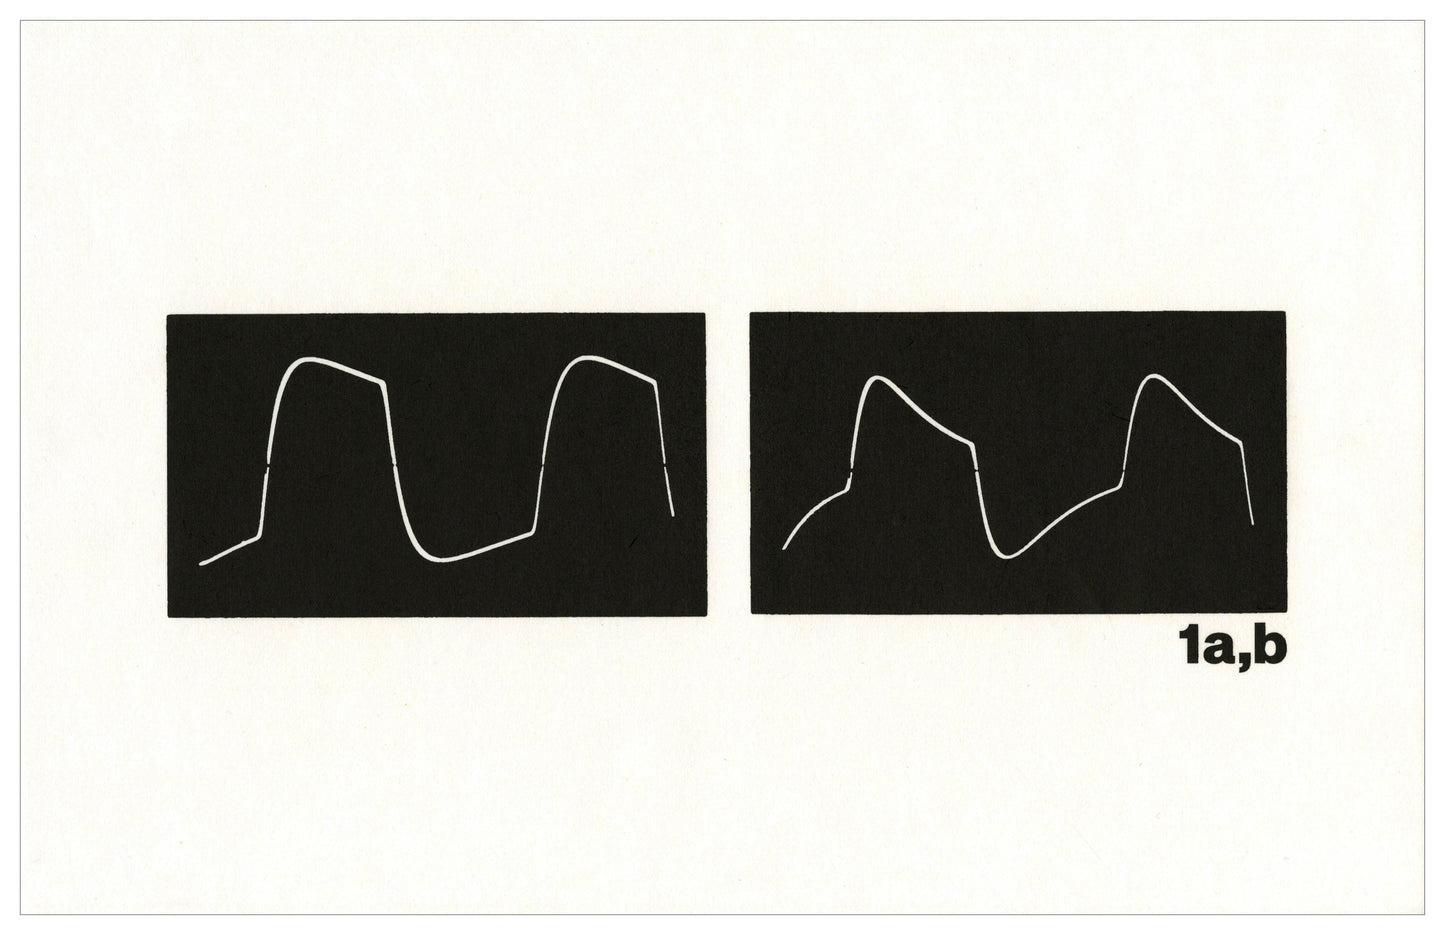 Micah Lexier - The Oscilloscope Drawings (1a,b)